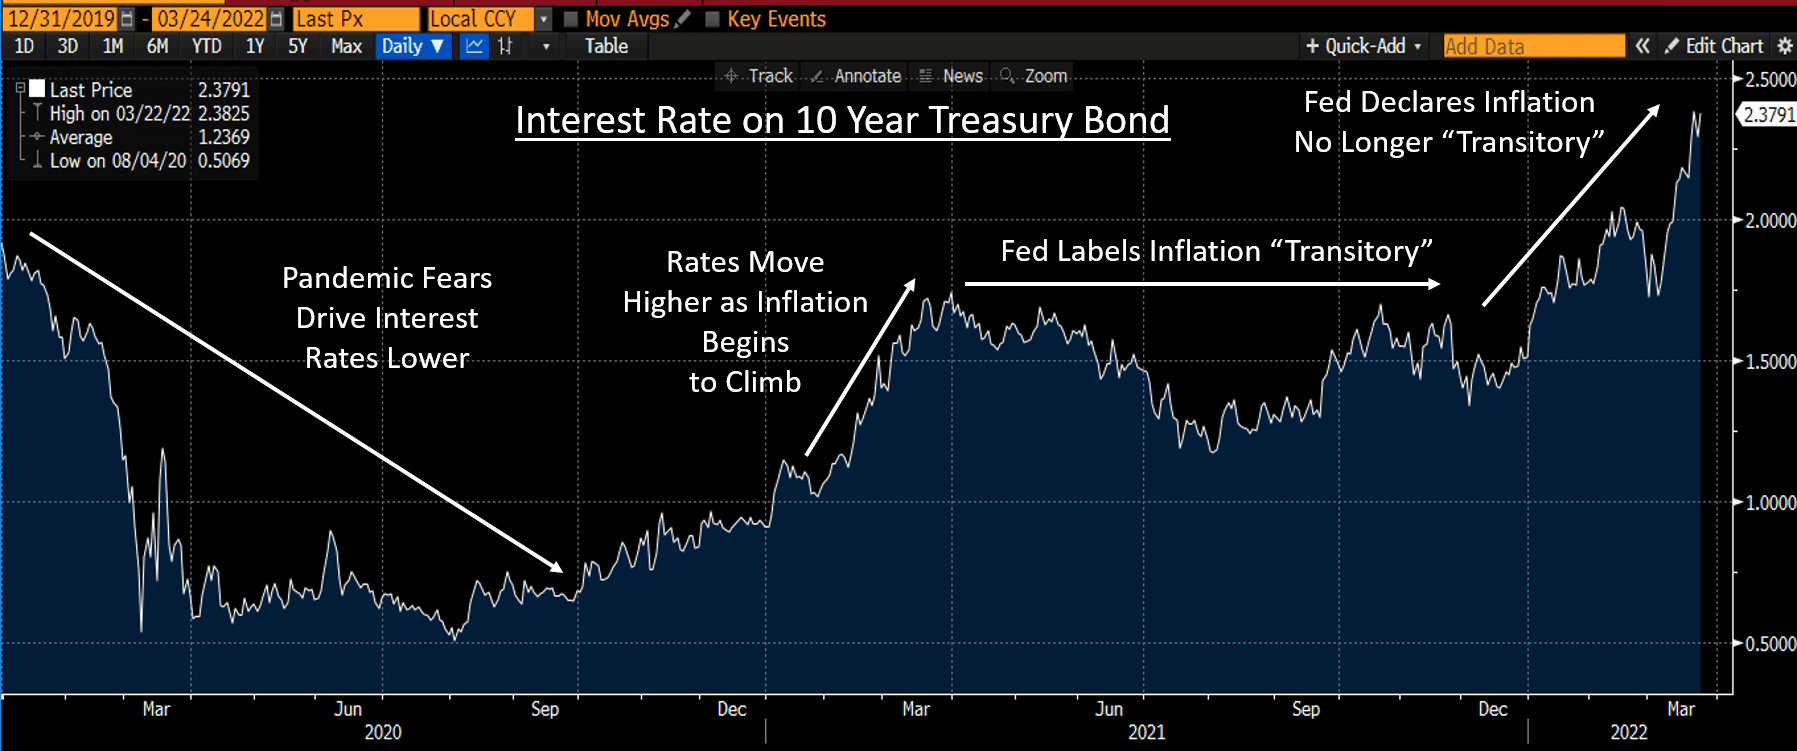 Interest Rates on 10 Year Treasury Bond